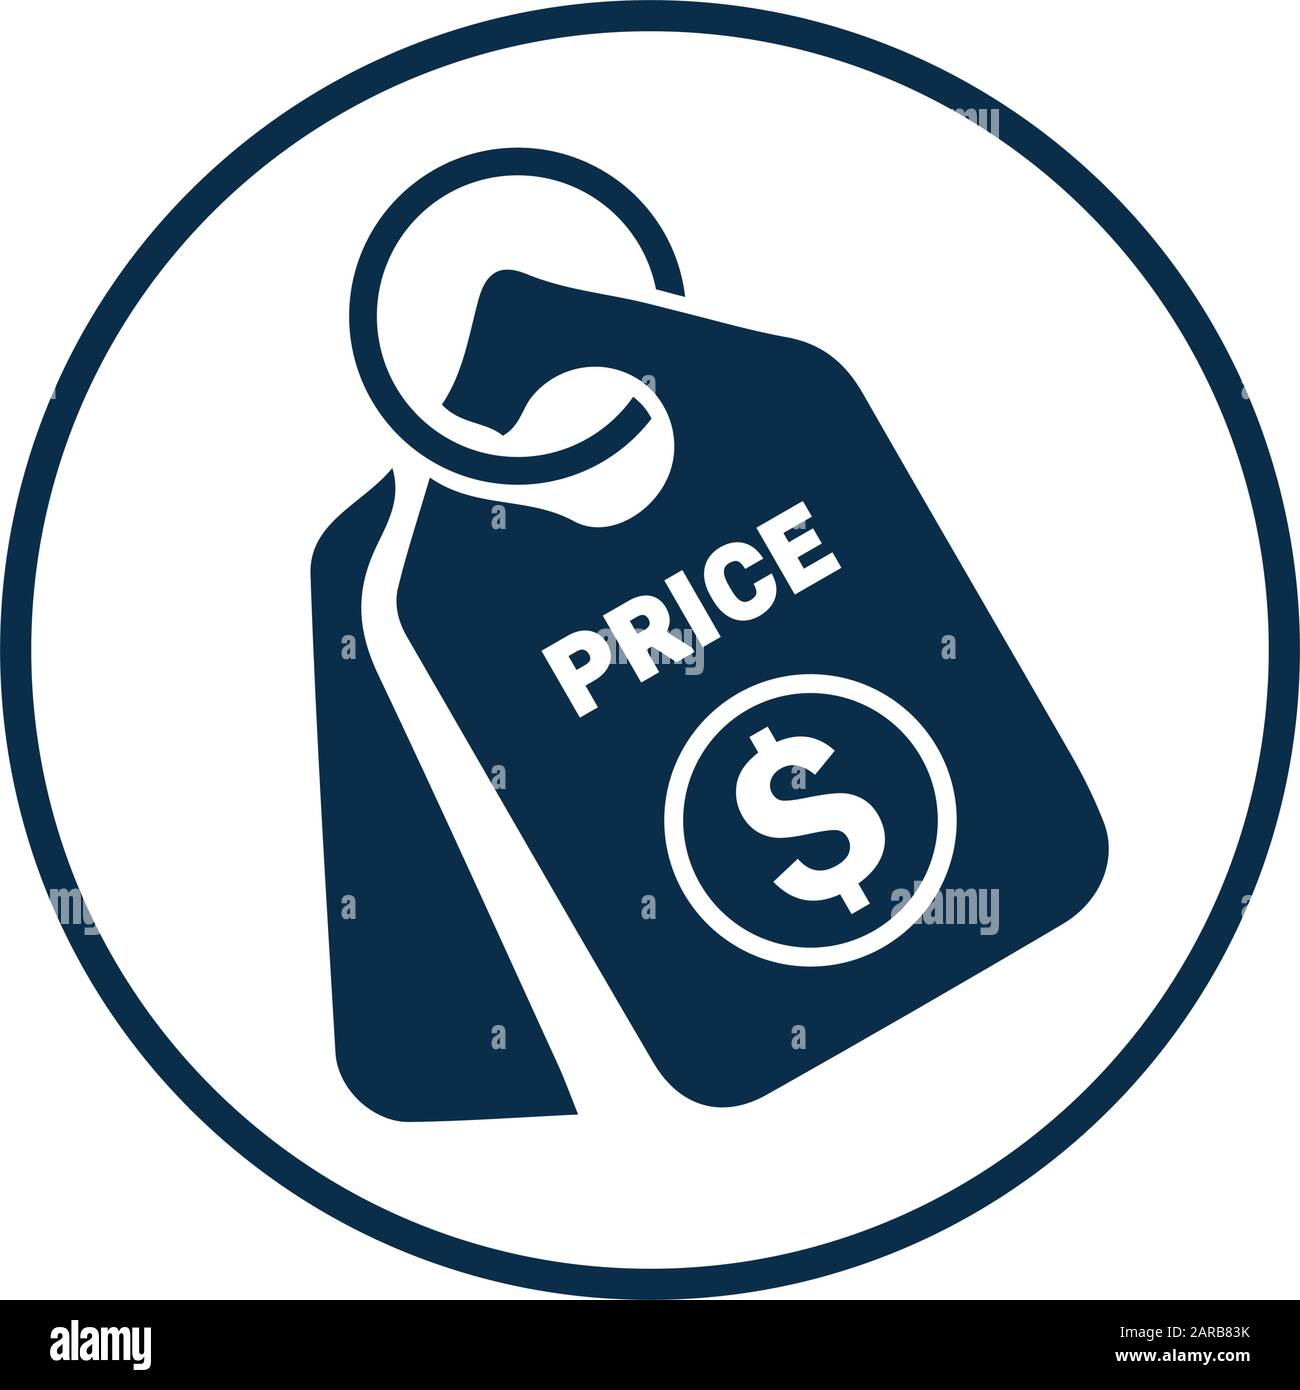 Price Tag Icon Graphic by JM Graphics · Creative Fabrica